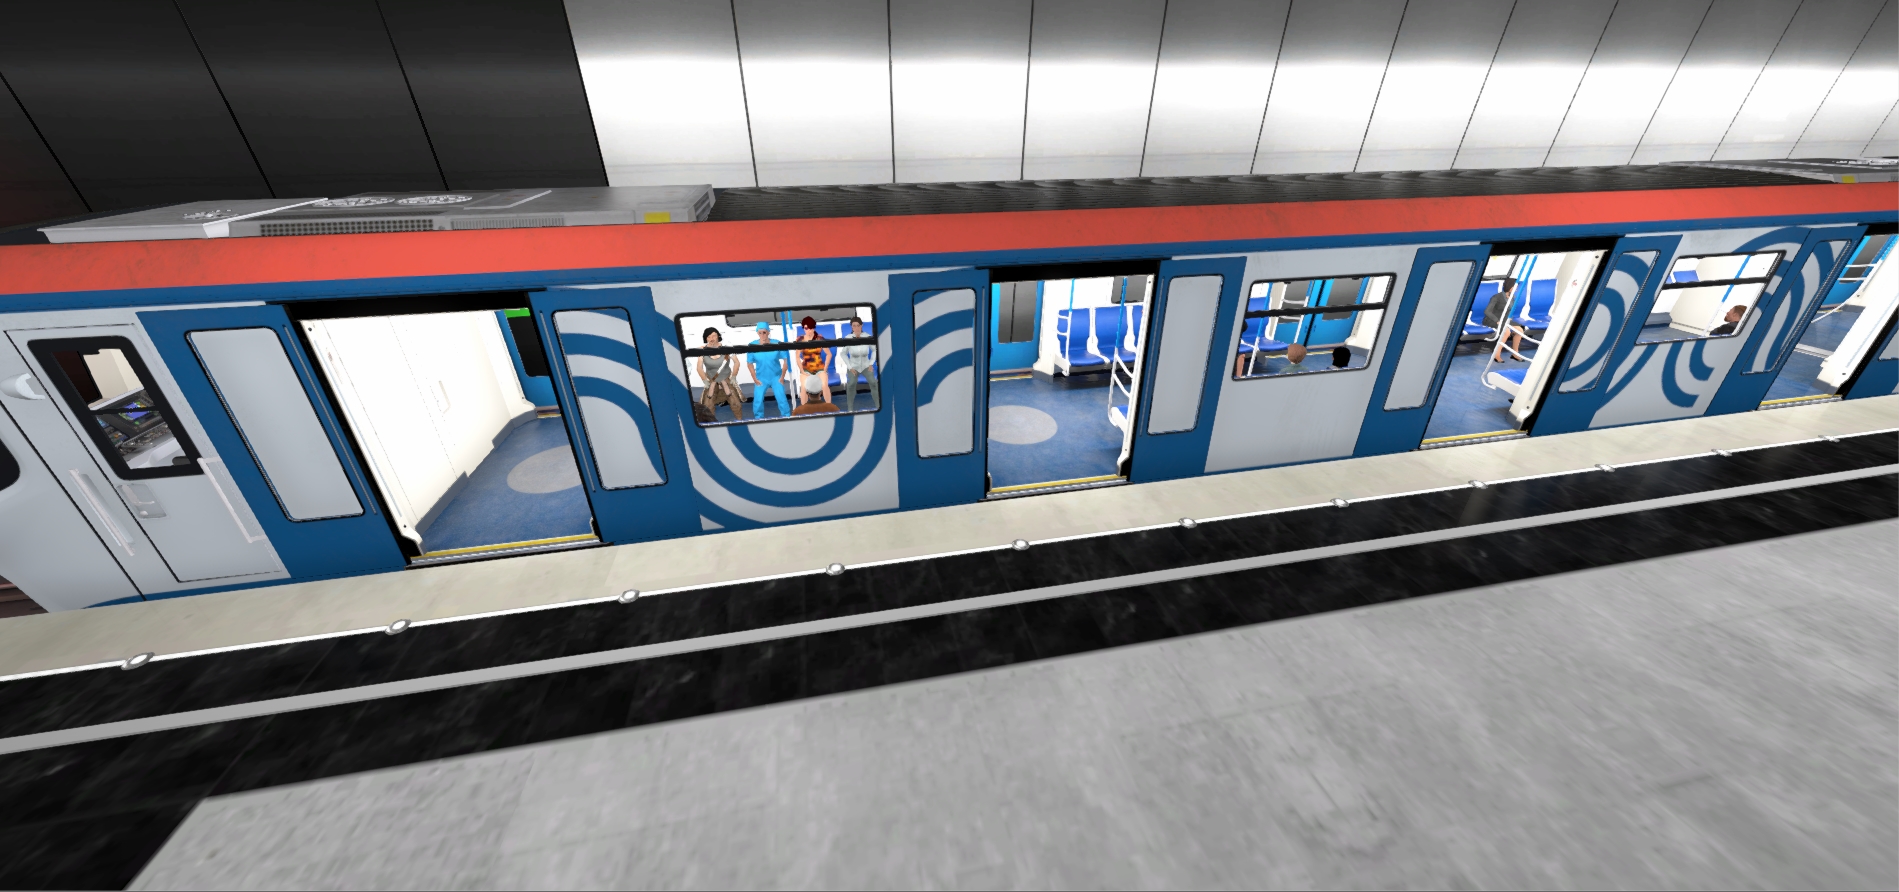 Metro Simulator 2019 Free Download